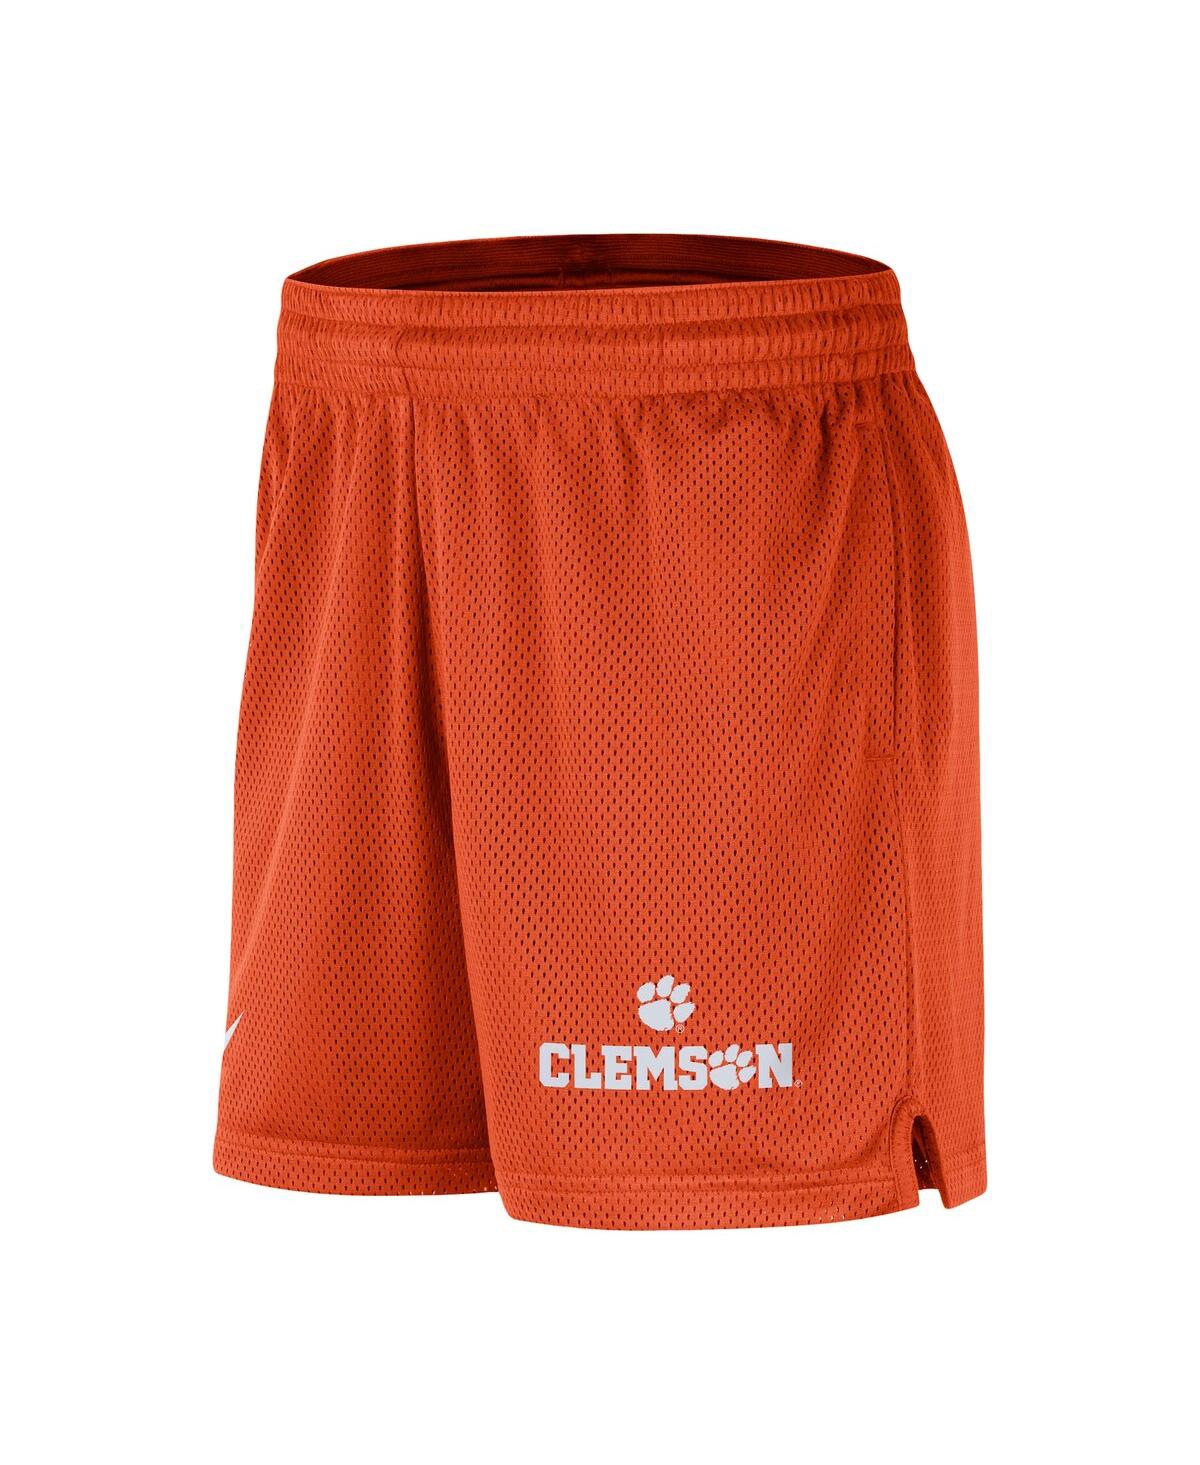 Shop Nike Men's  Orange Clemson Tigers Mesh Performance Shorts